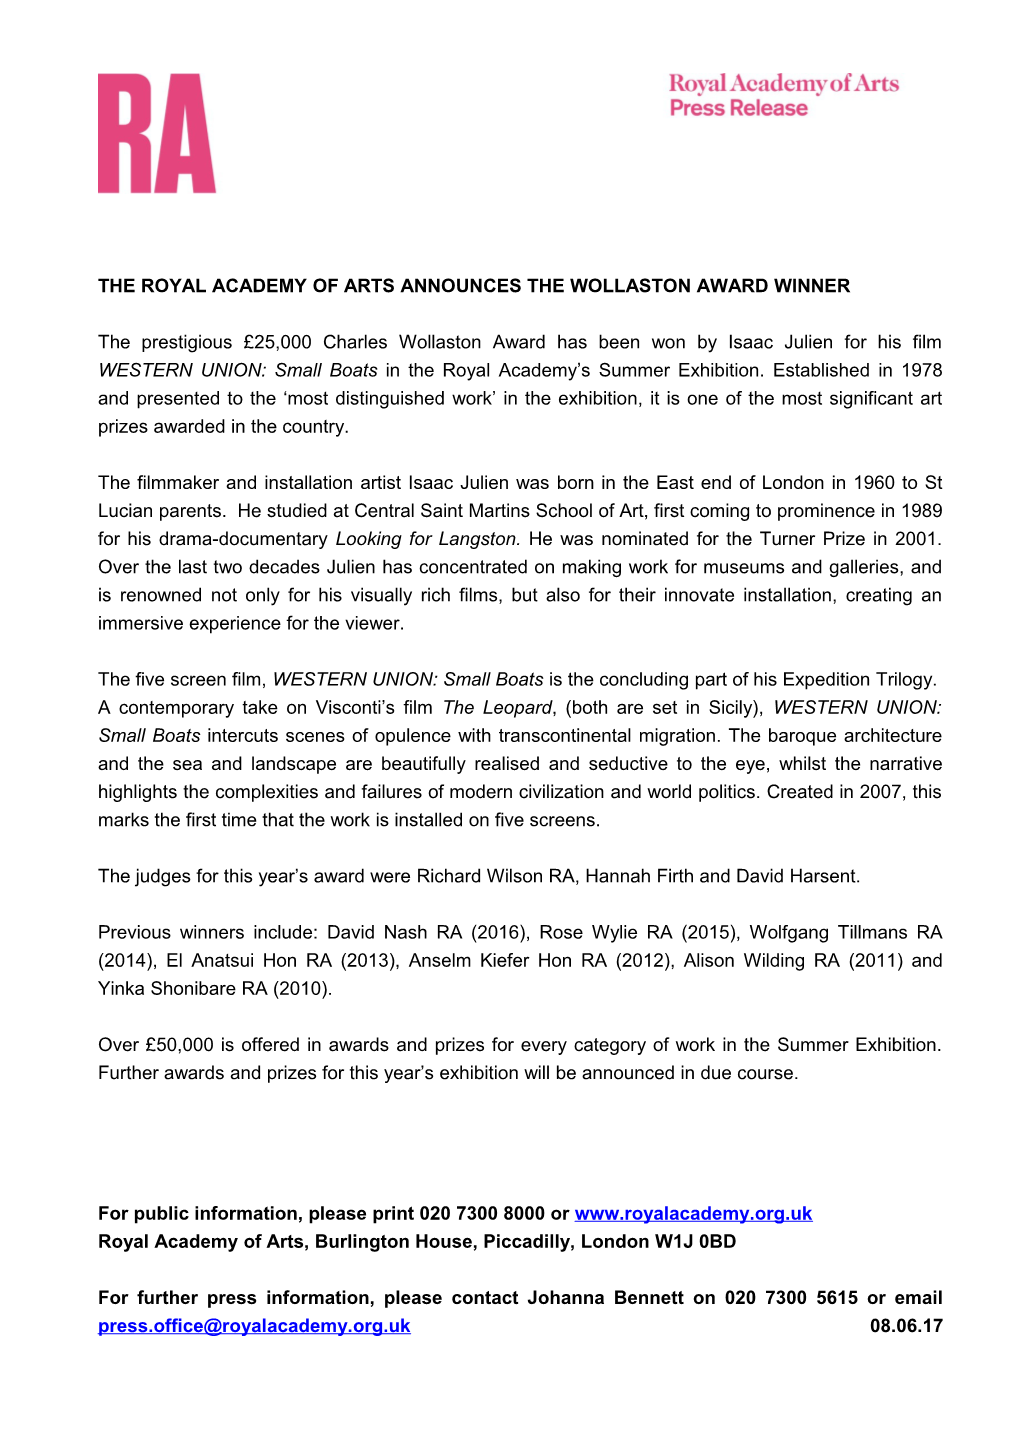 The Royal Academy of Arts Announces the Wollaston Award Winner